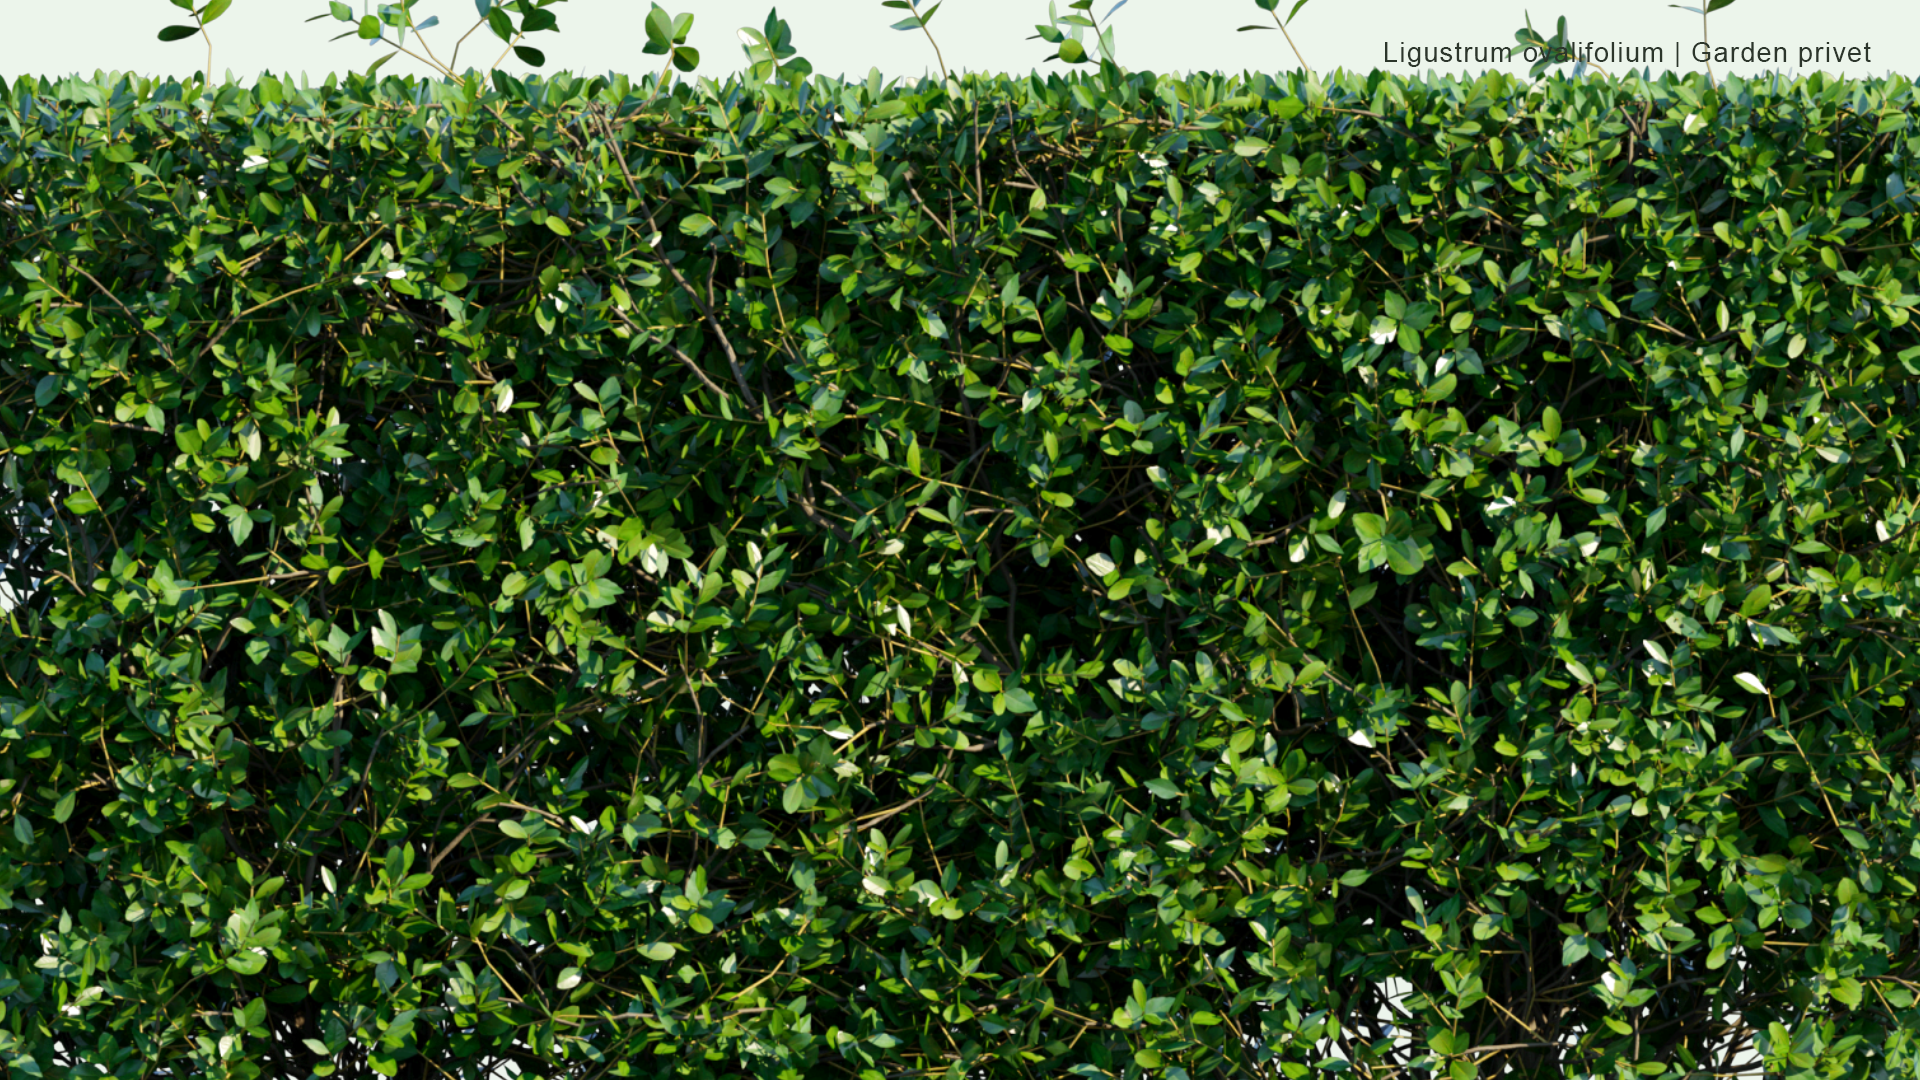 2D Ligustrum Ovalifolium - Korean Privet, California Privet, Garden Privet, Oval-Leaved Privet